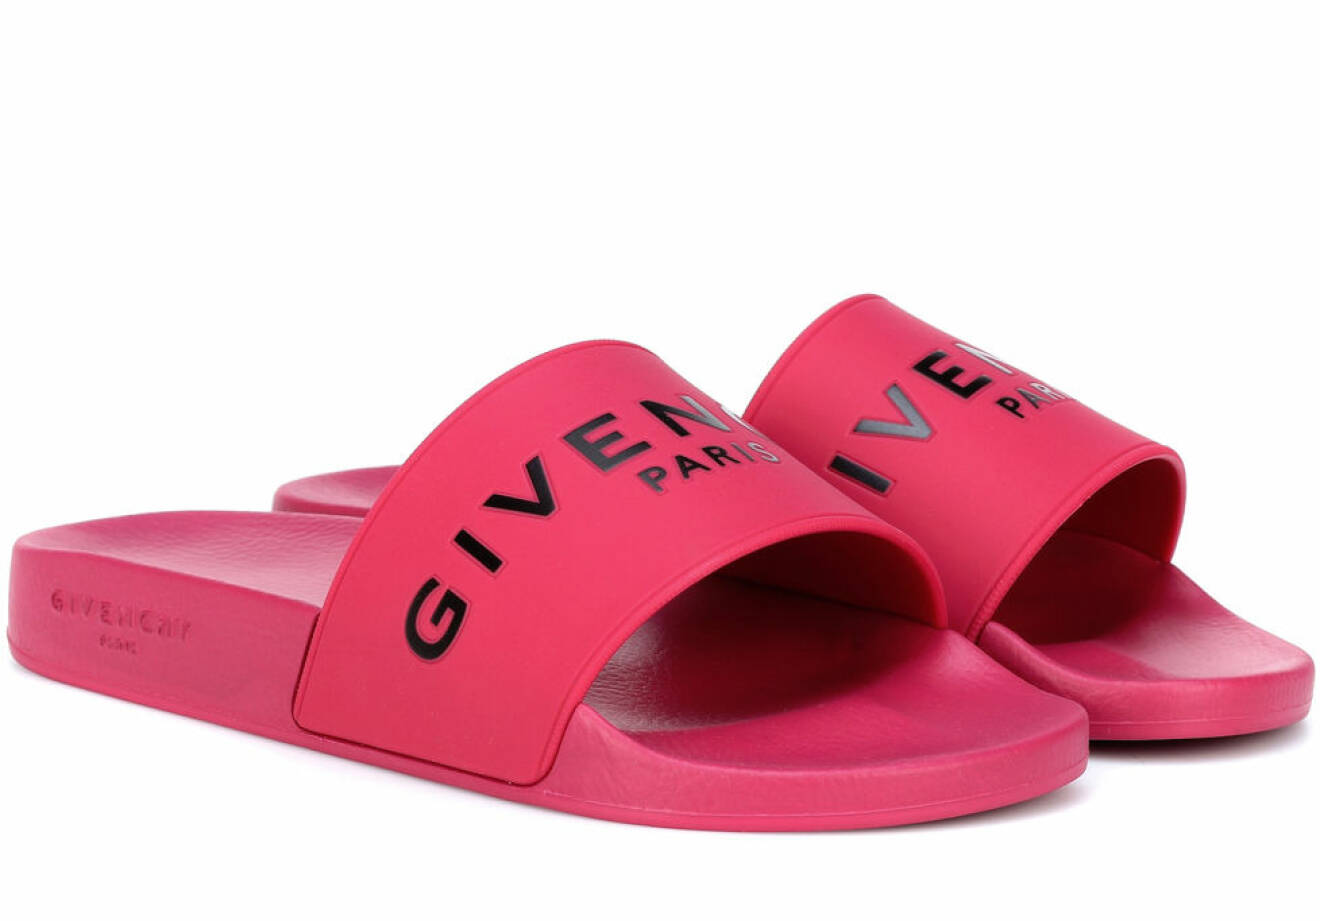 Givenchy chockrosa sandaler